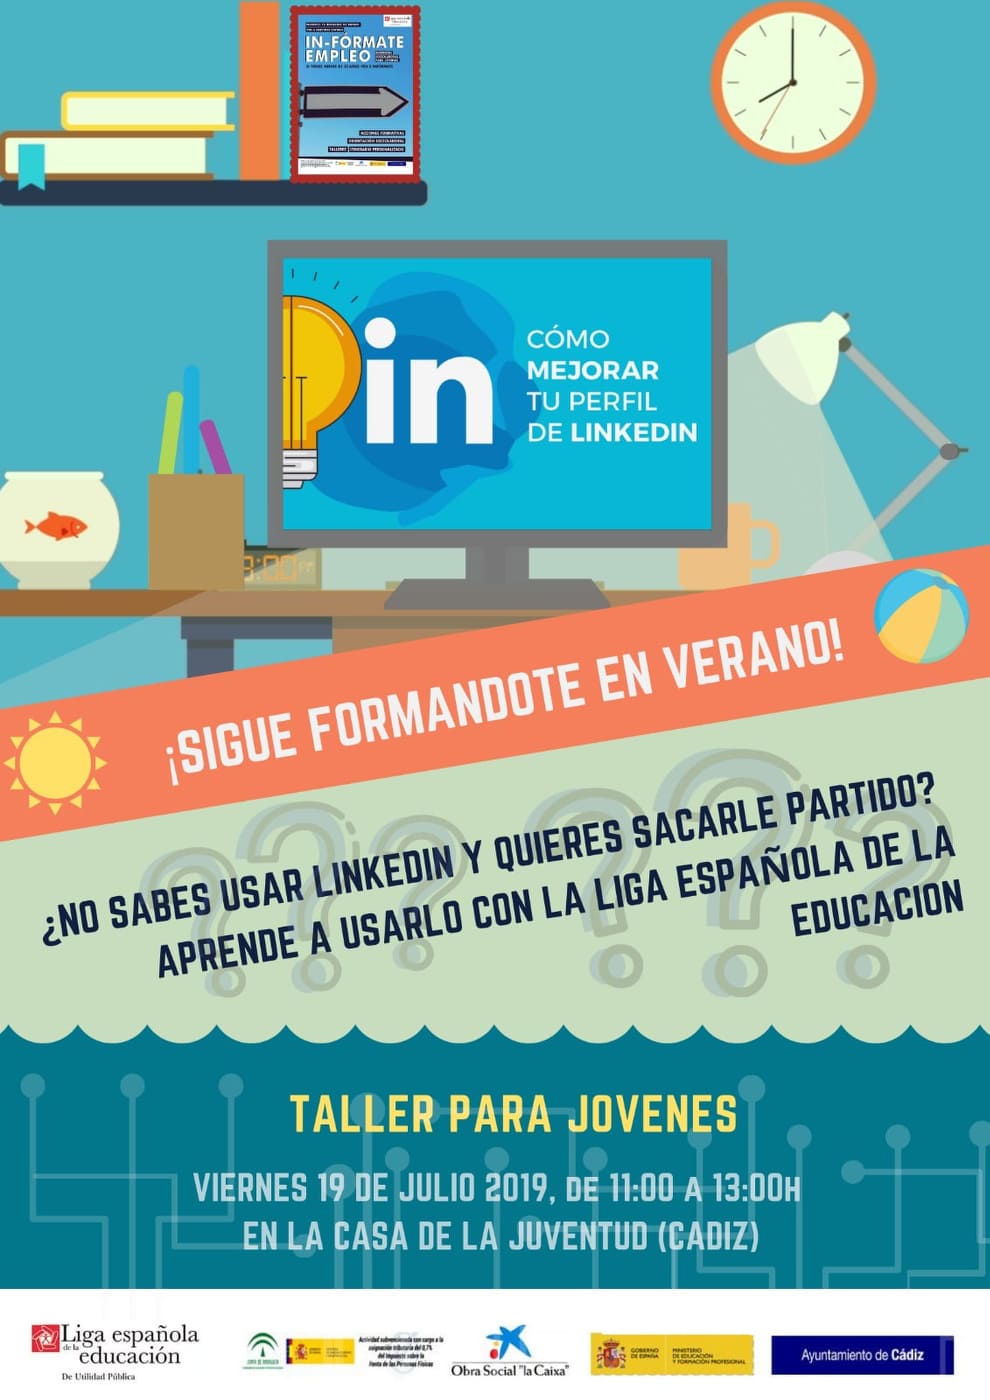 Taller de Linkedin de la Liga de la Educación gaditana - Juventud Cádiz